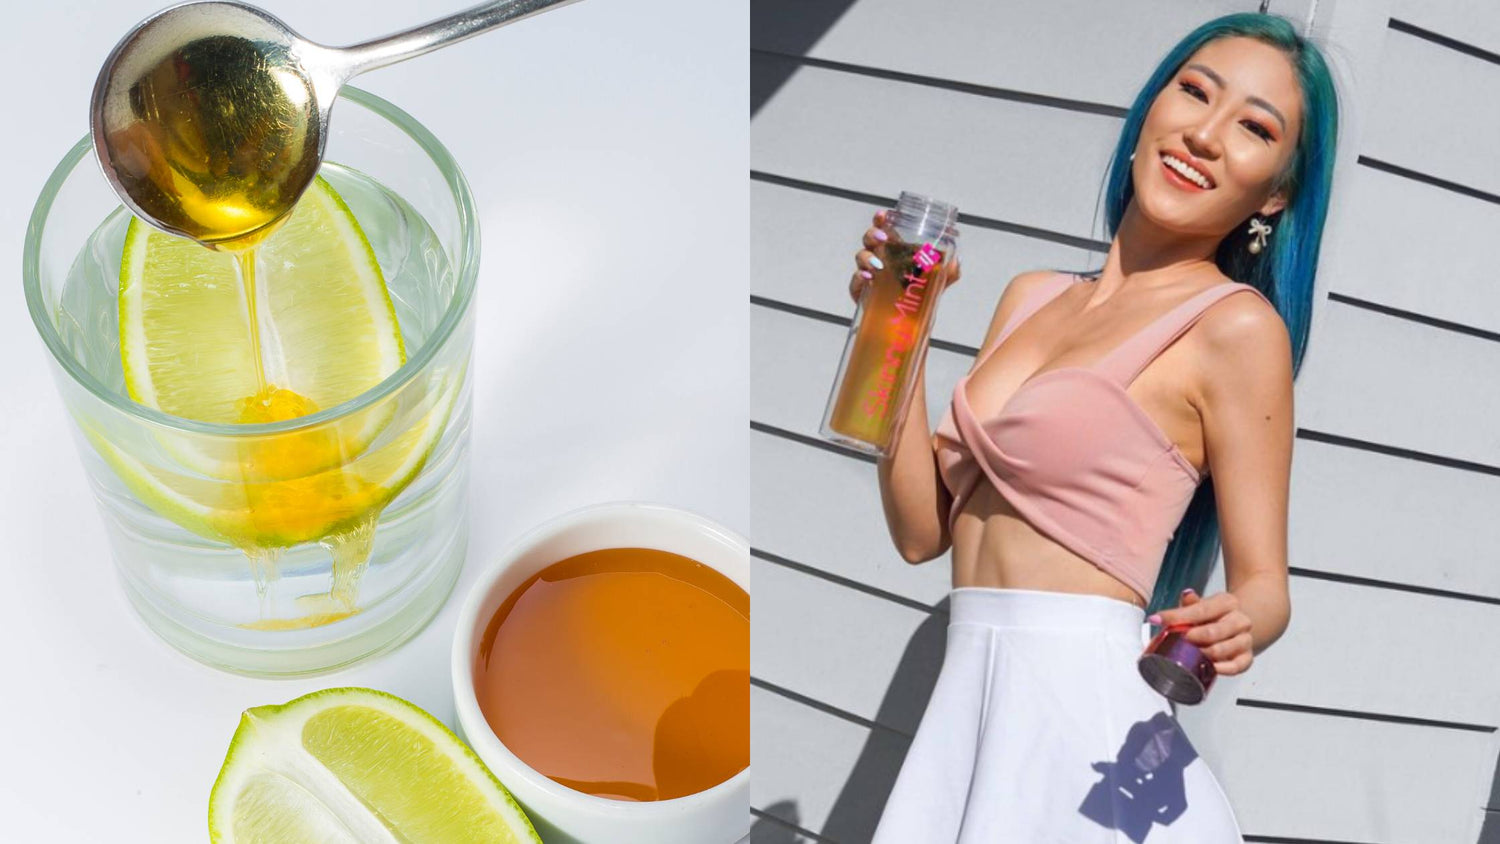 Honey lemon water for weight loss alongside a model holding a bottle of 28 Day Teatox.